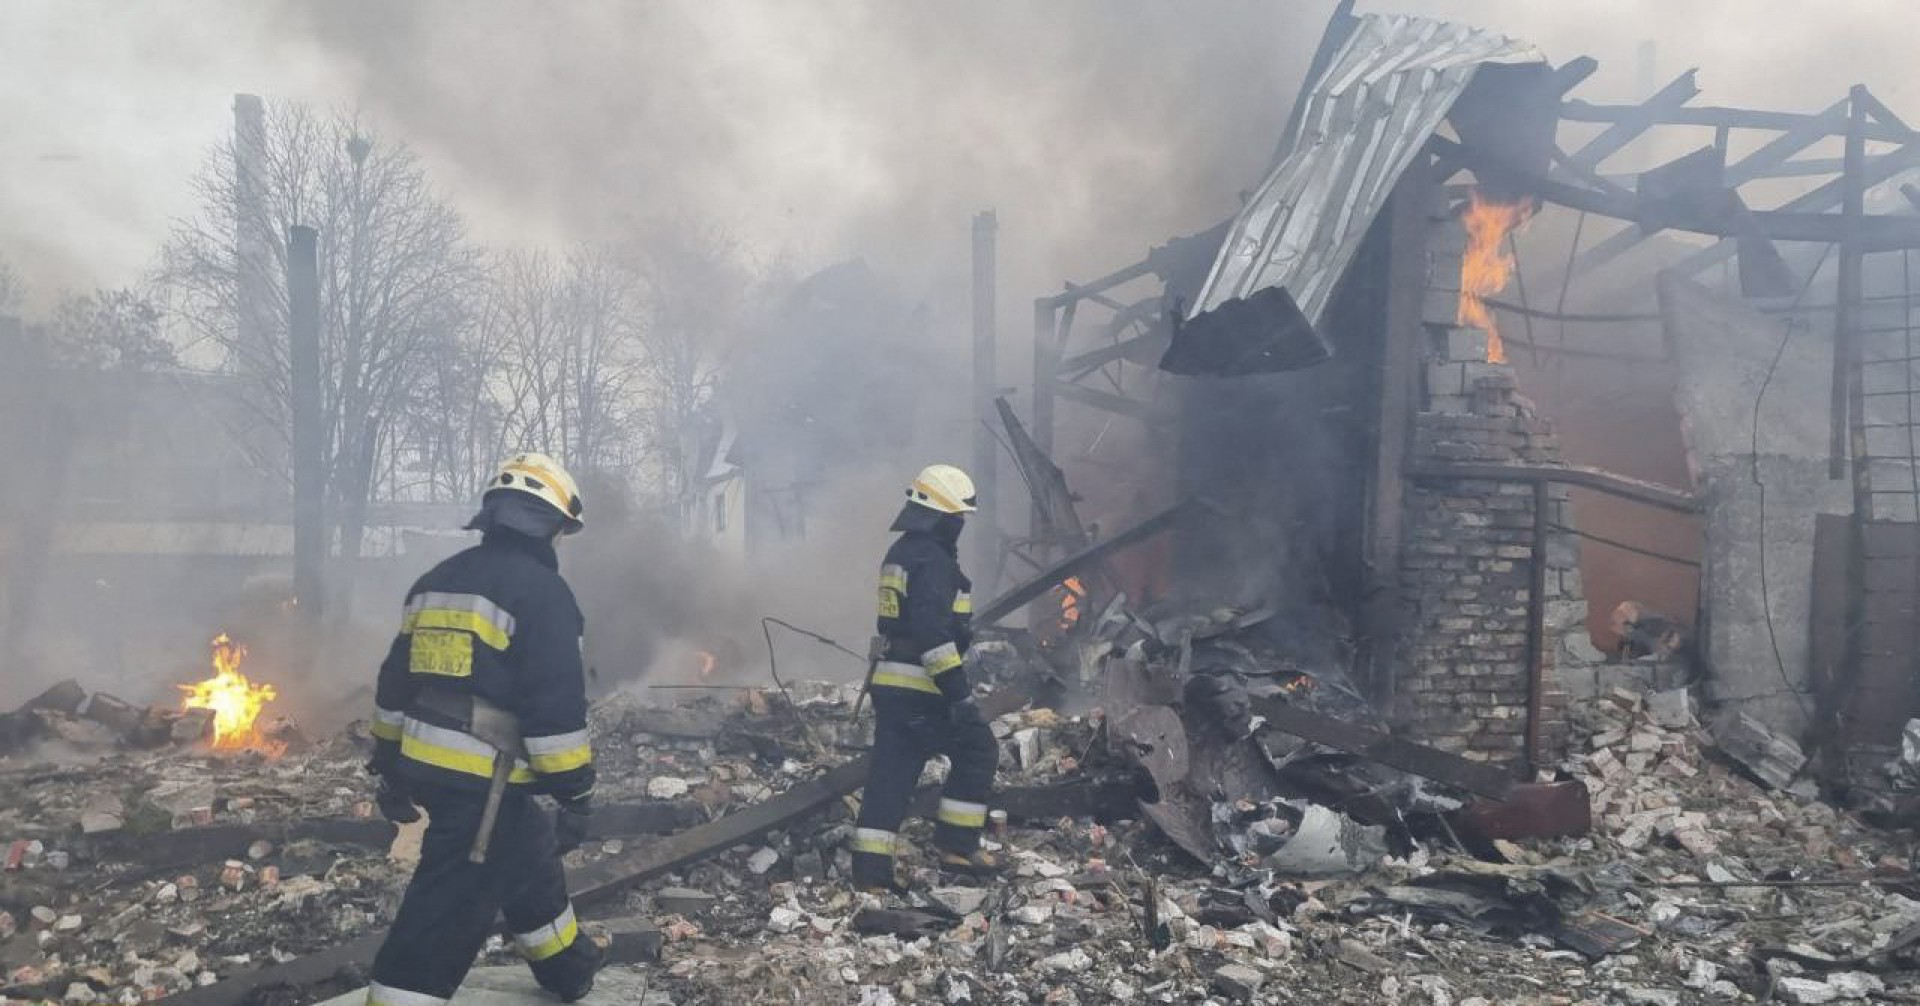  - AFP PHOTO / STATE EMERGENCY SERVICE OF UKRAINE / HANDOUT